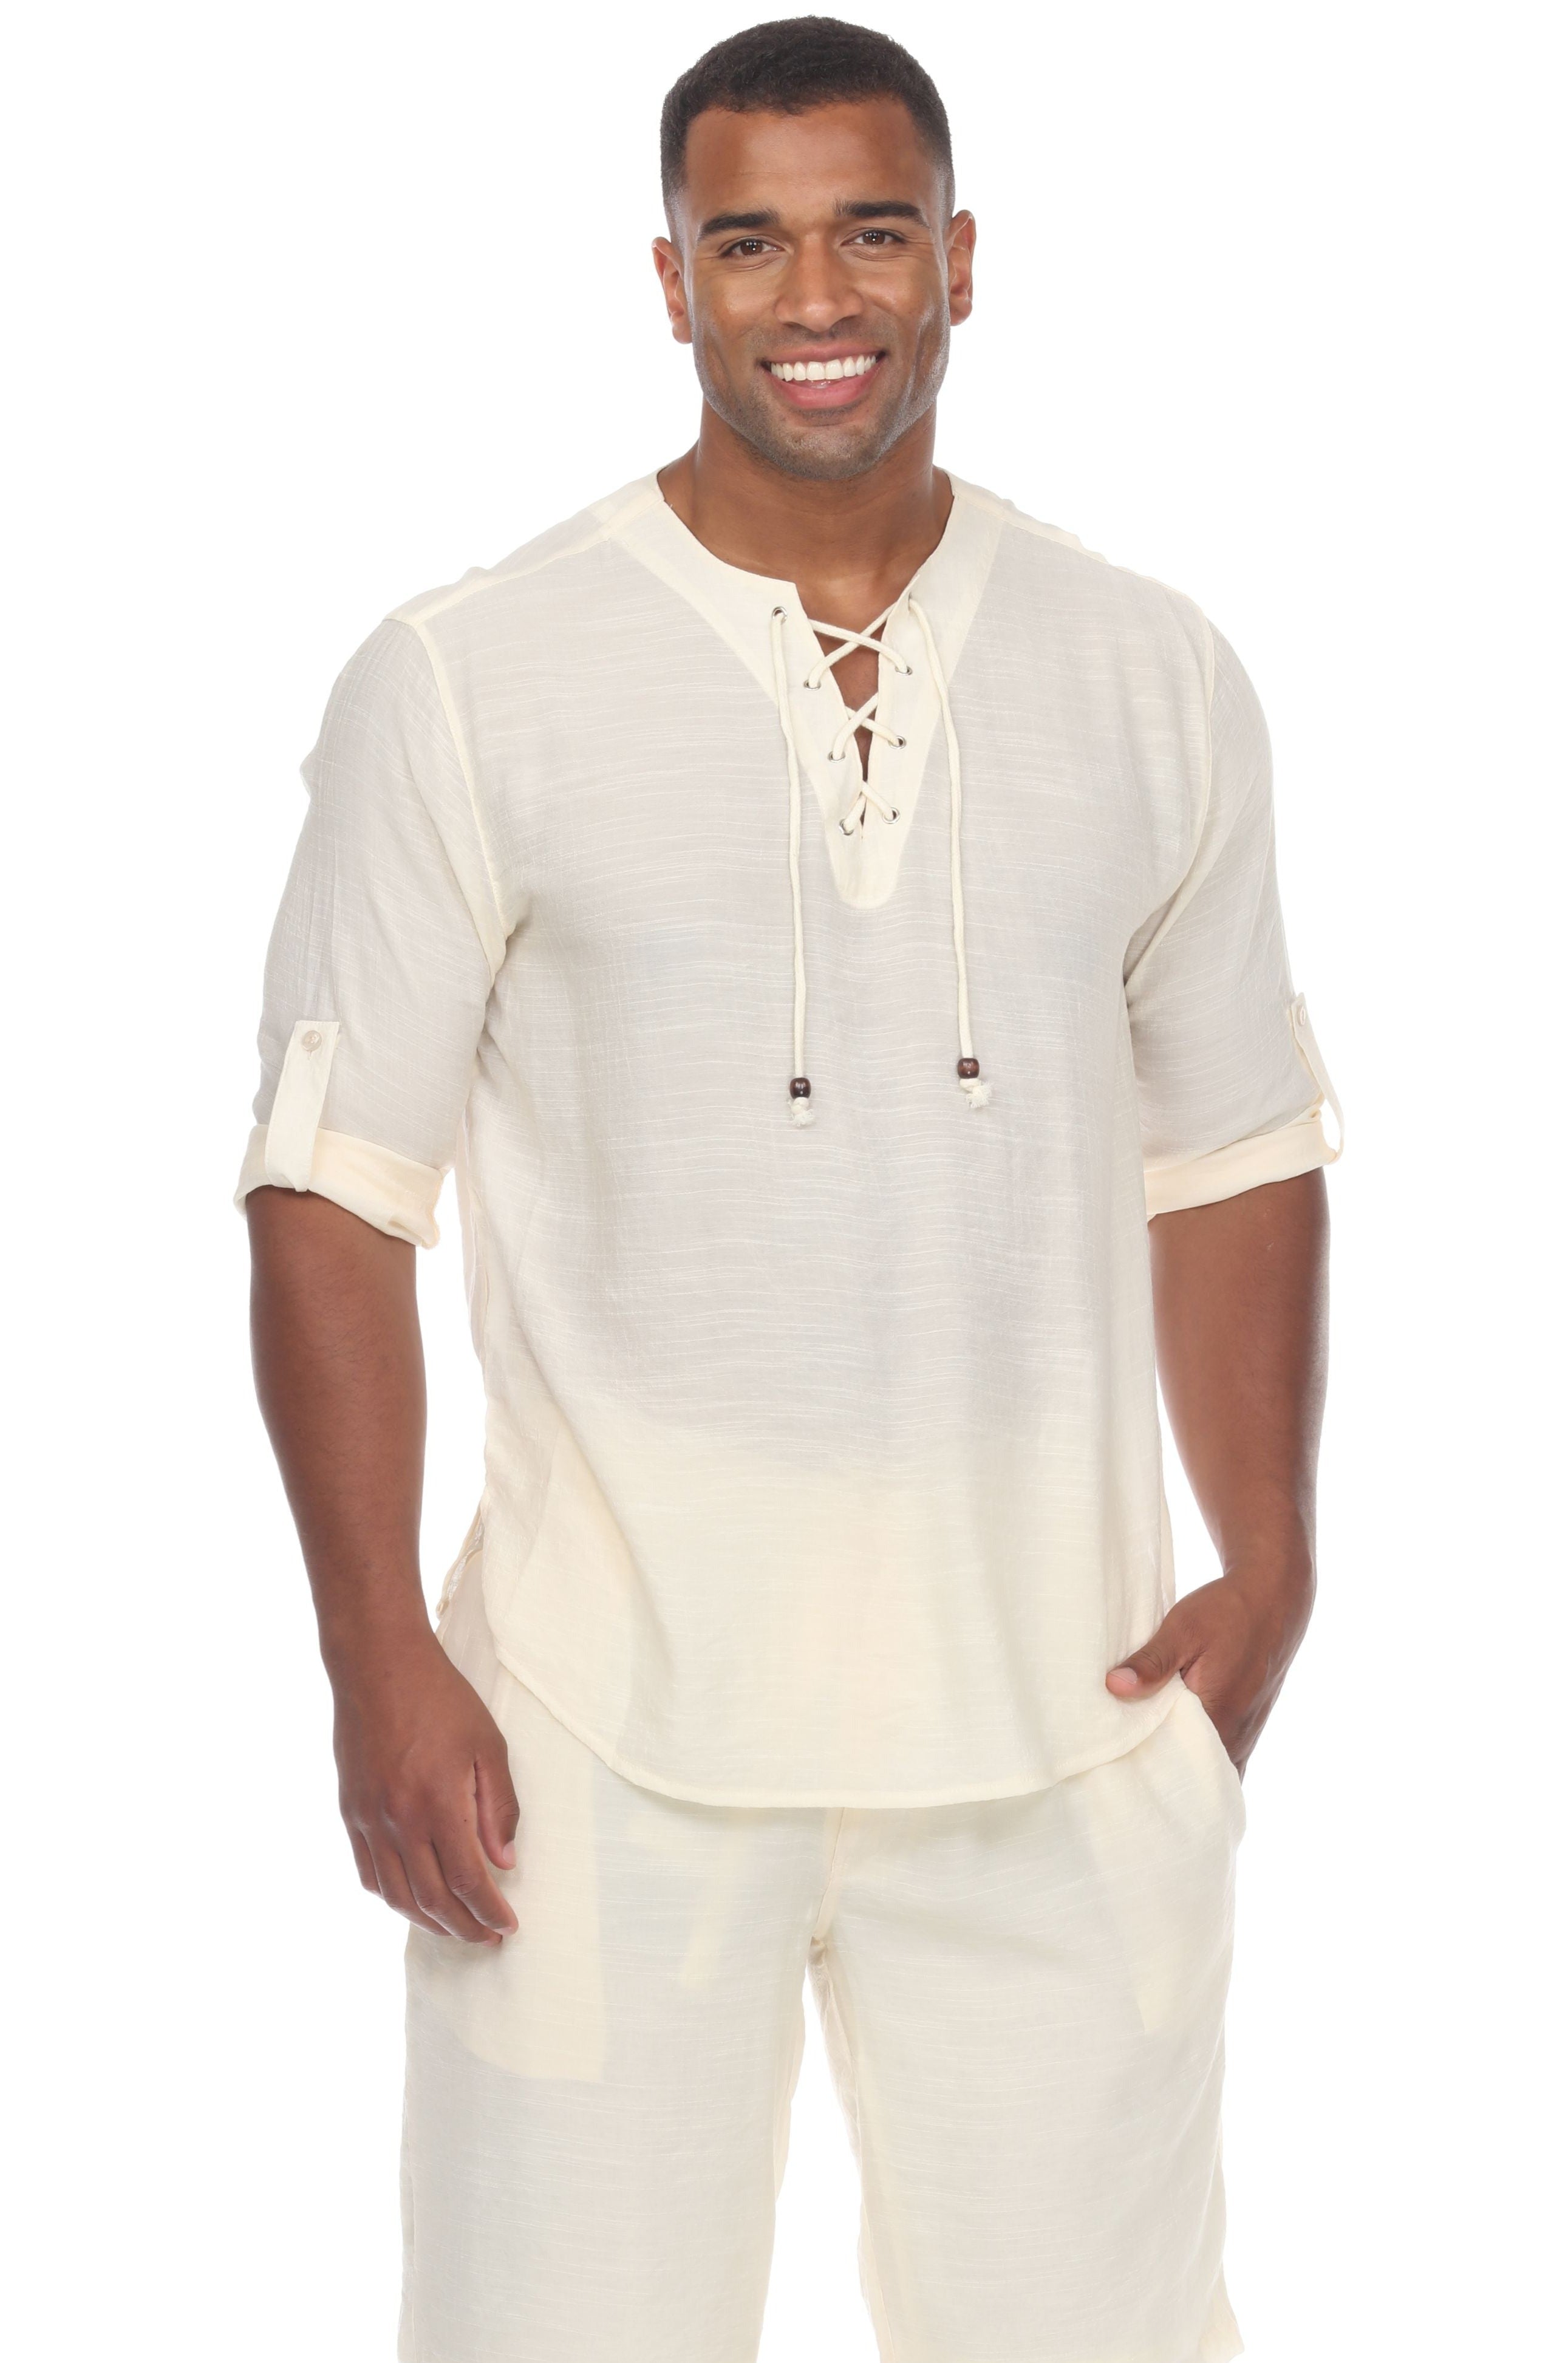 Men's Laced Up Beachwear Long Sleeve Shirt - Mojito Collection - Beachwear Shirt, Long Sleeve Shirt, Mens Shirt, Resortwear